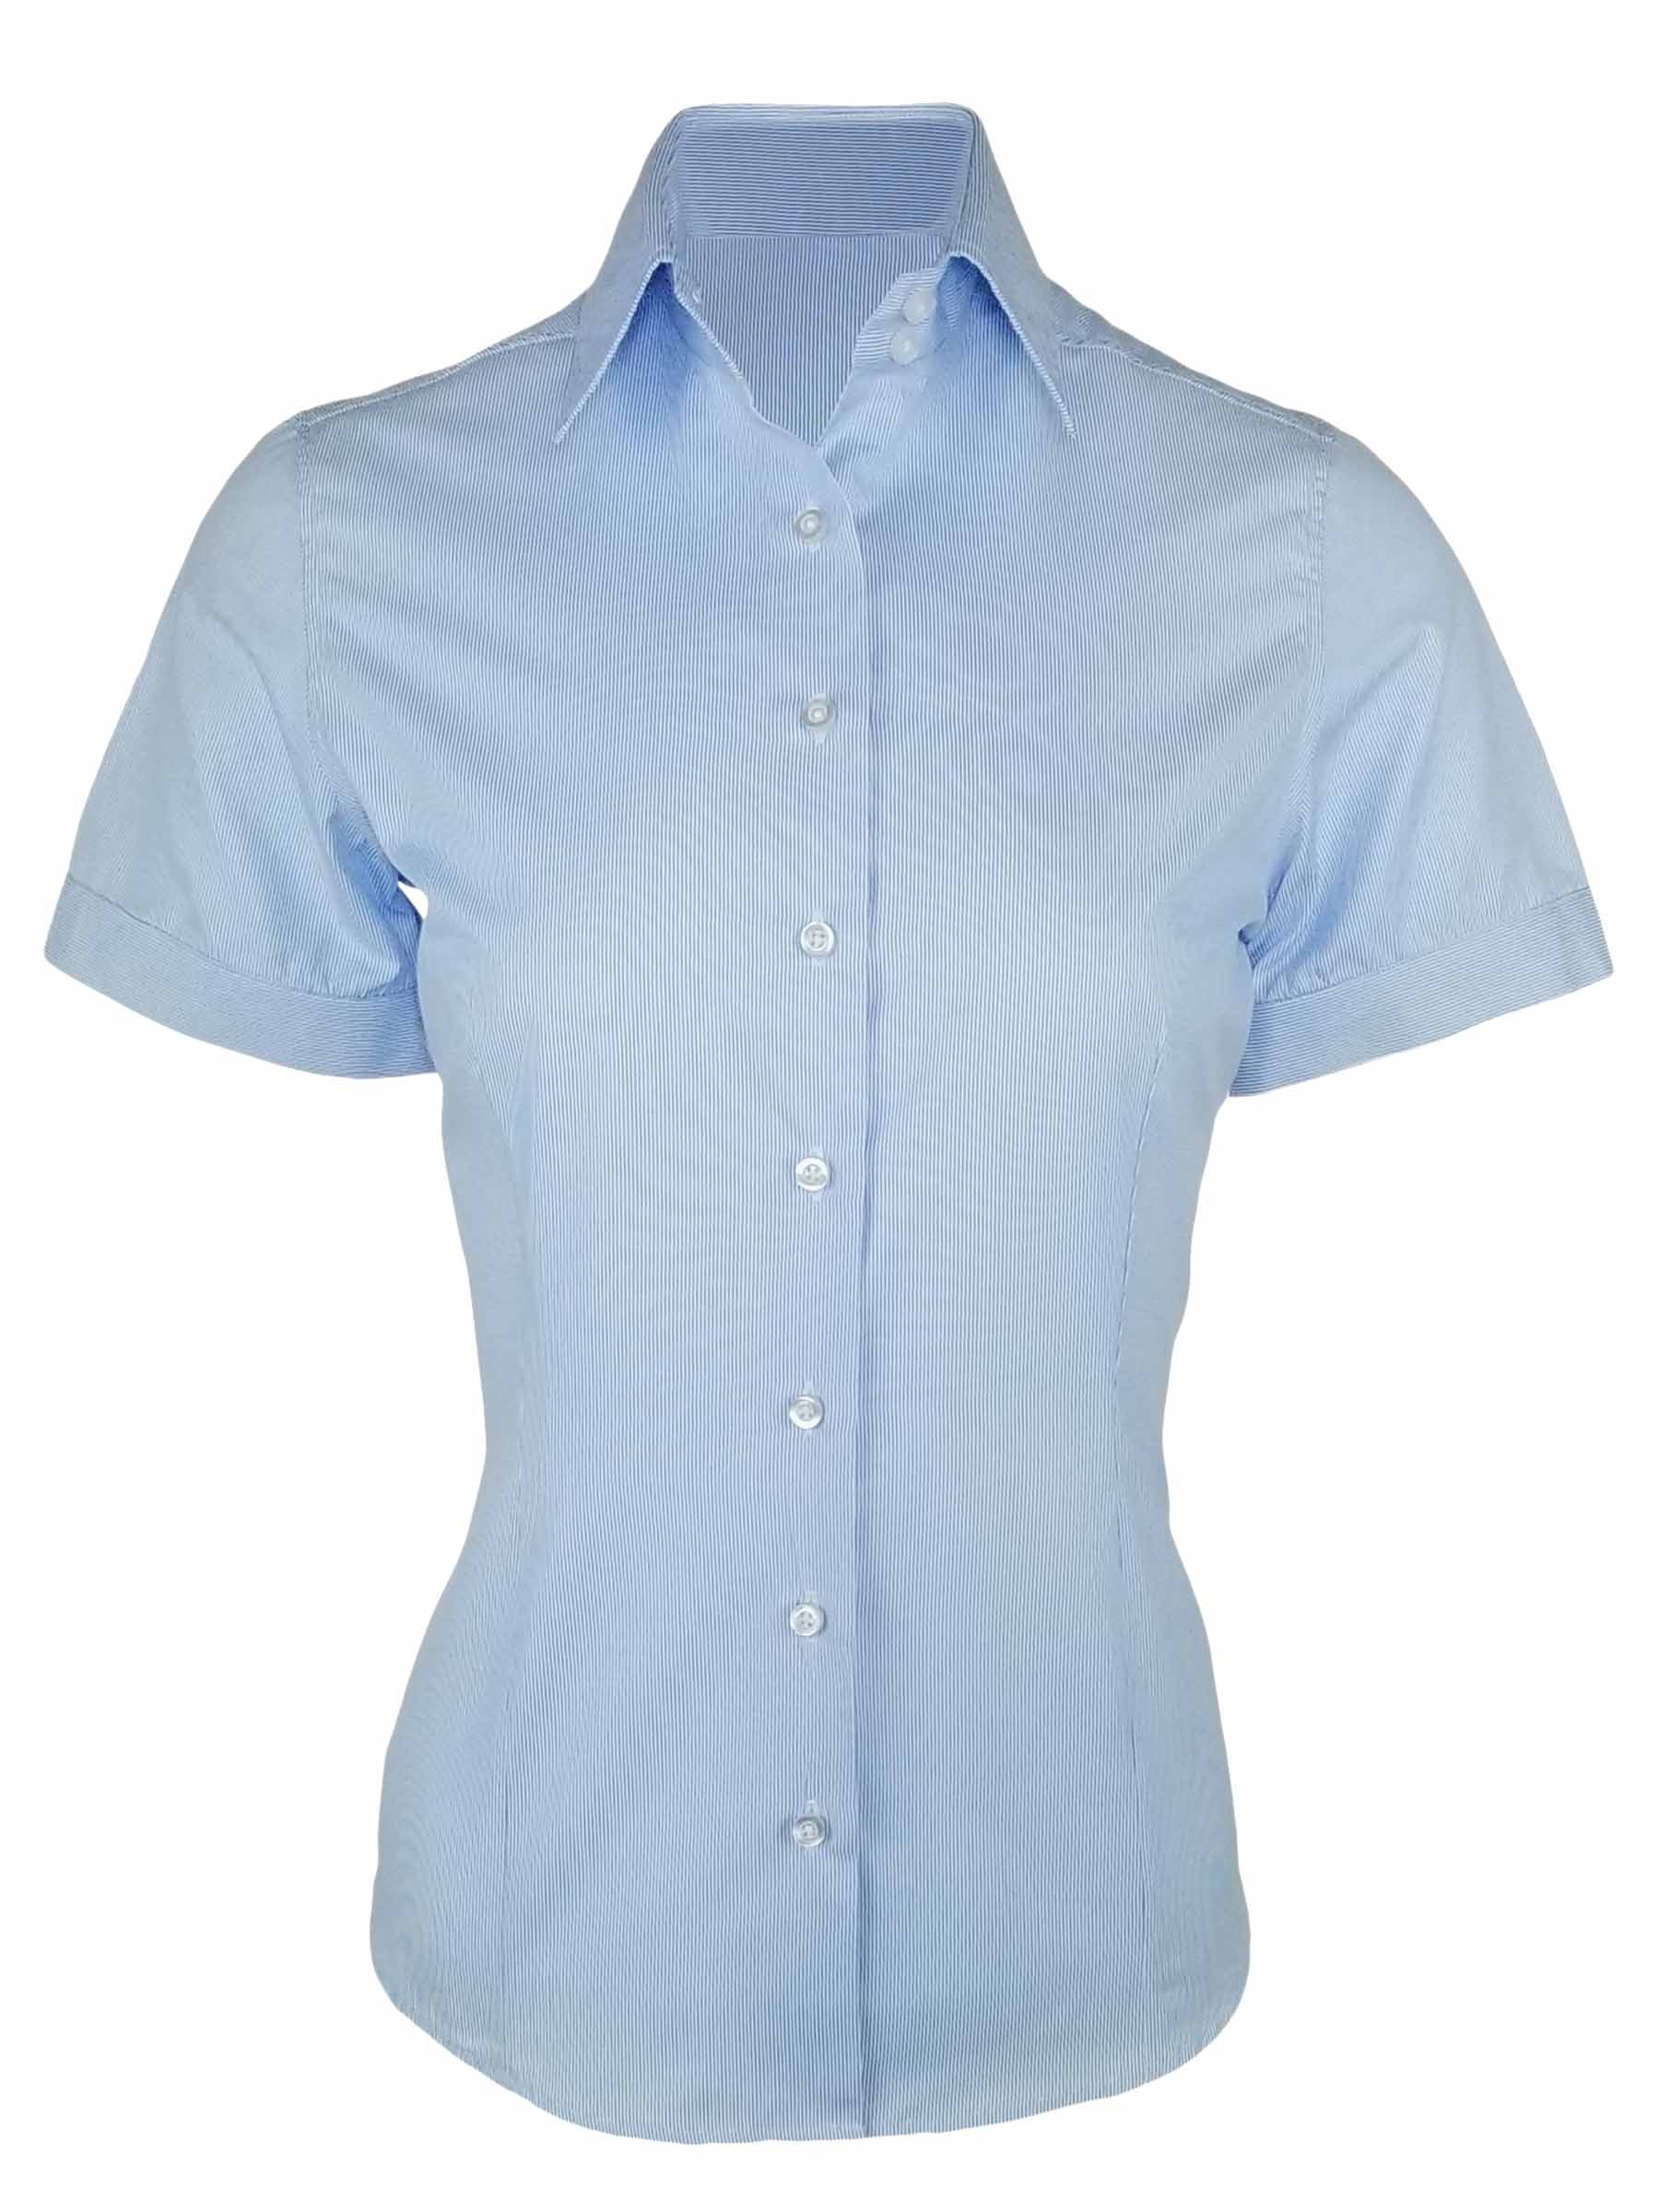 Women's Frankie Shirt - Light Blue Fine Stripe Short Sleeve | Uniform Edit